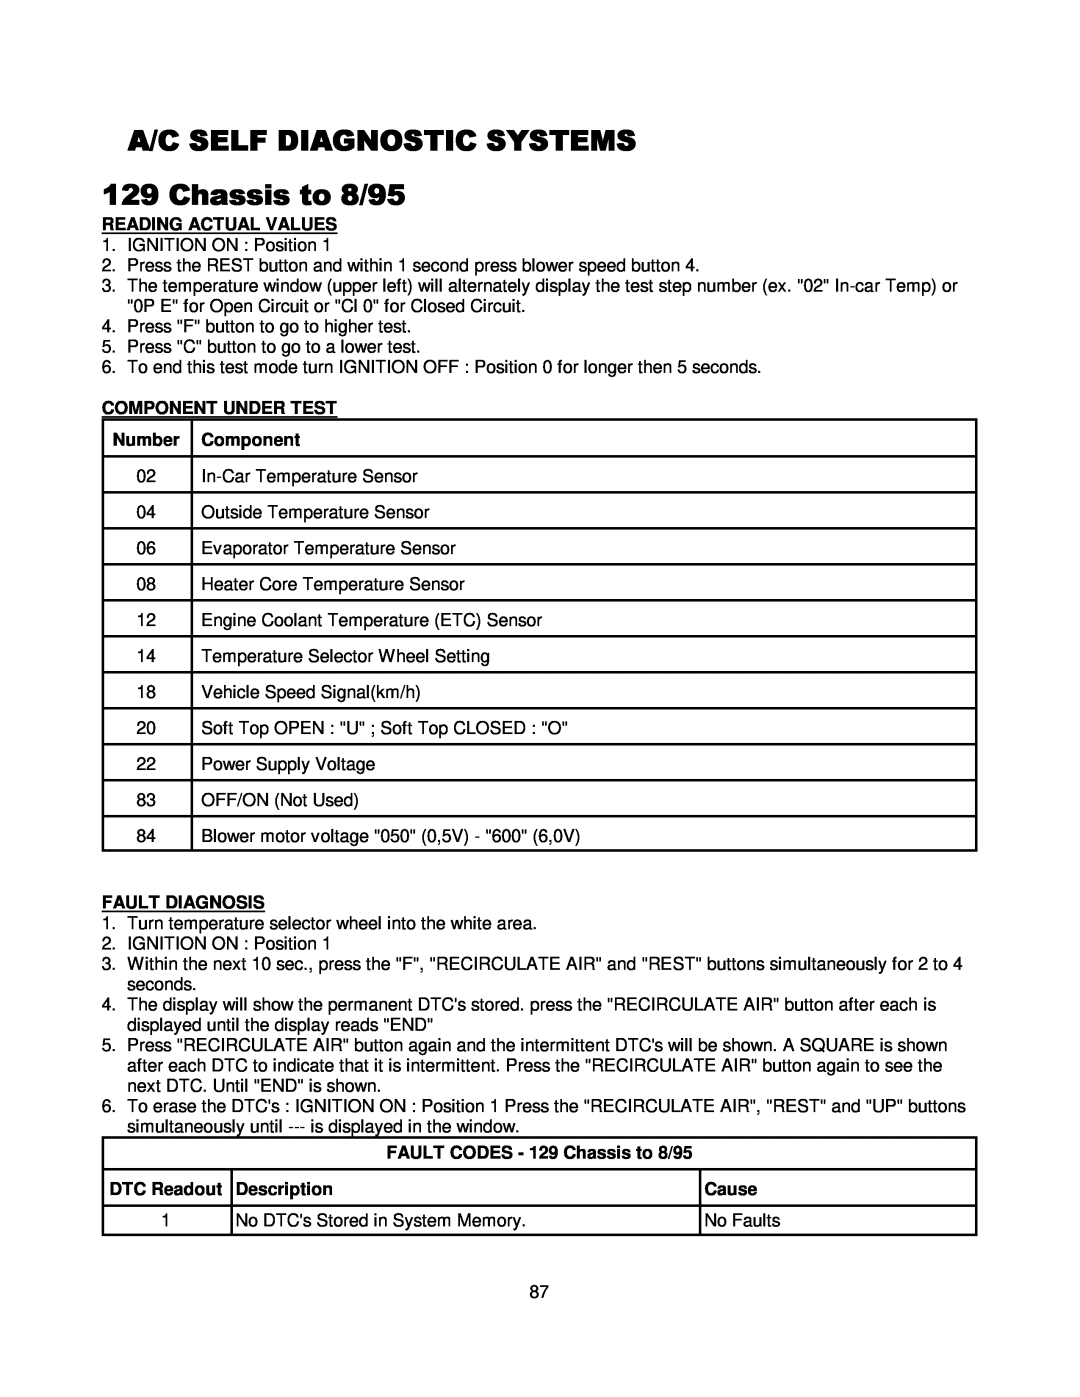 Mercedes-Benz CS1000 647+!2879, Reading Actual Values, Component Under Test, Number, Fault Diagnosis, DTC Readout, Cause 